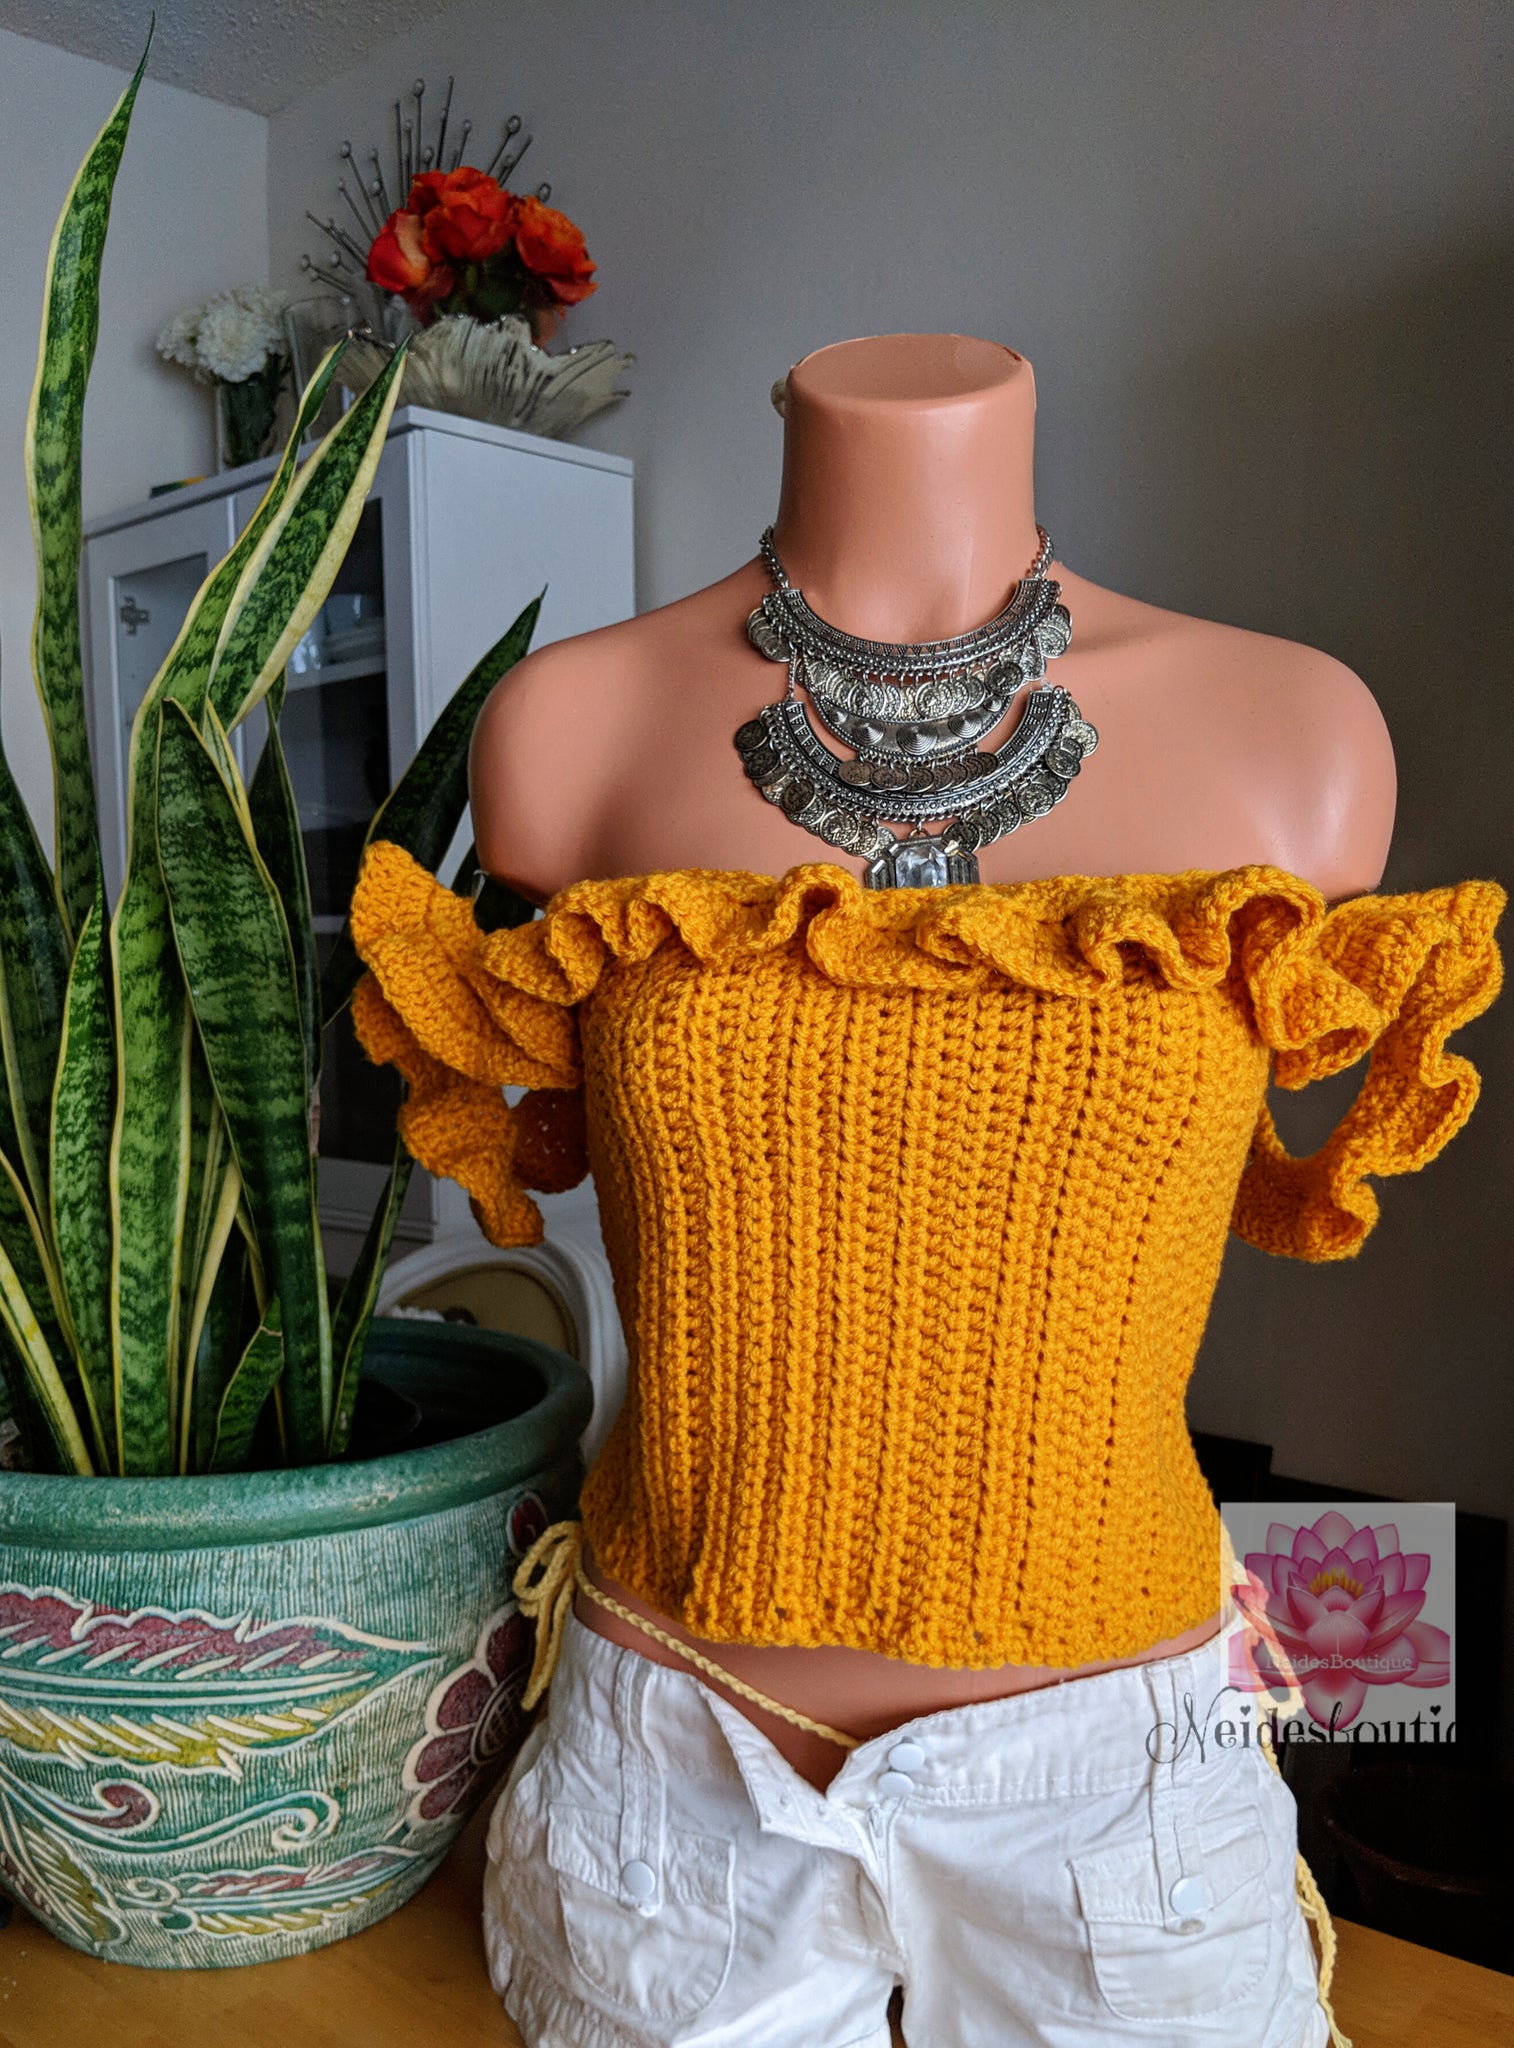 La cubanita top, Crochet bralette, crochet crop top,boho,crochet halte –  Neides-Boutique